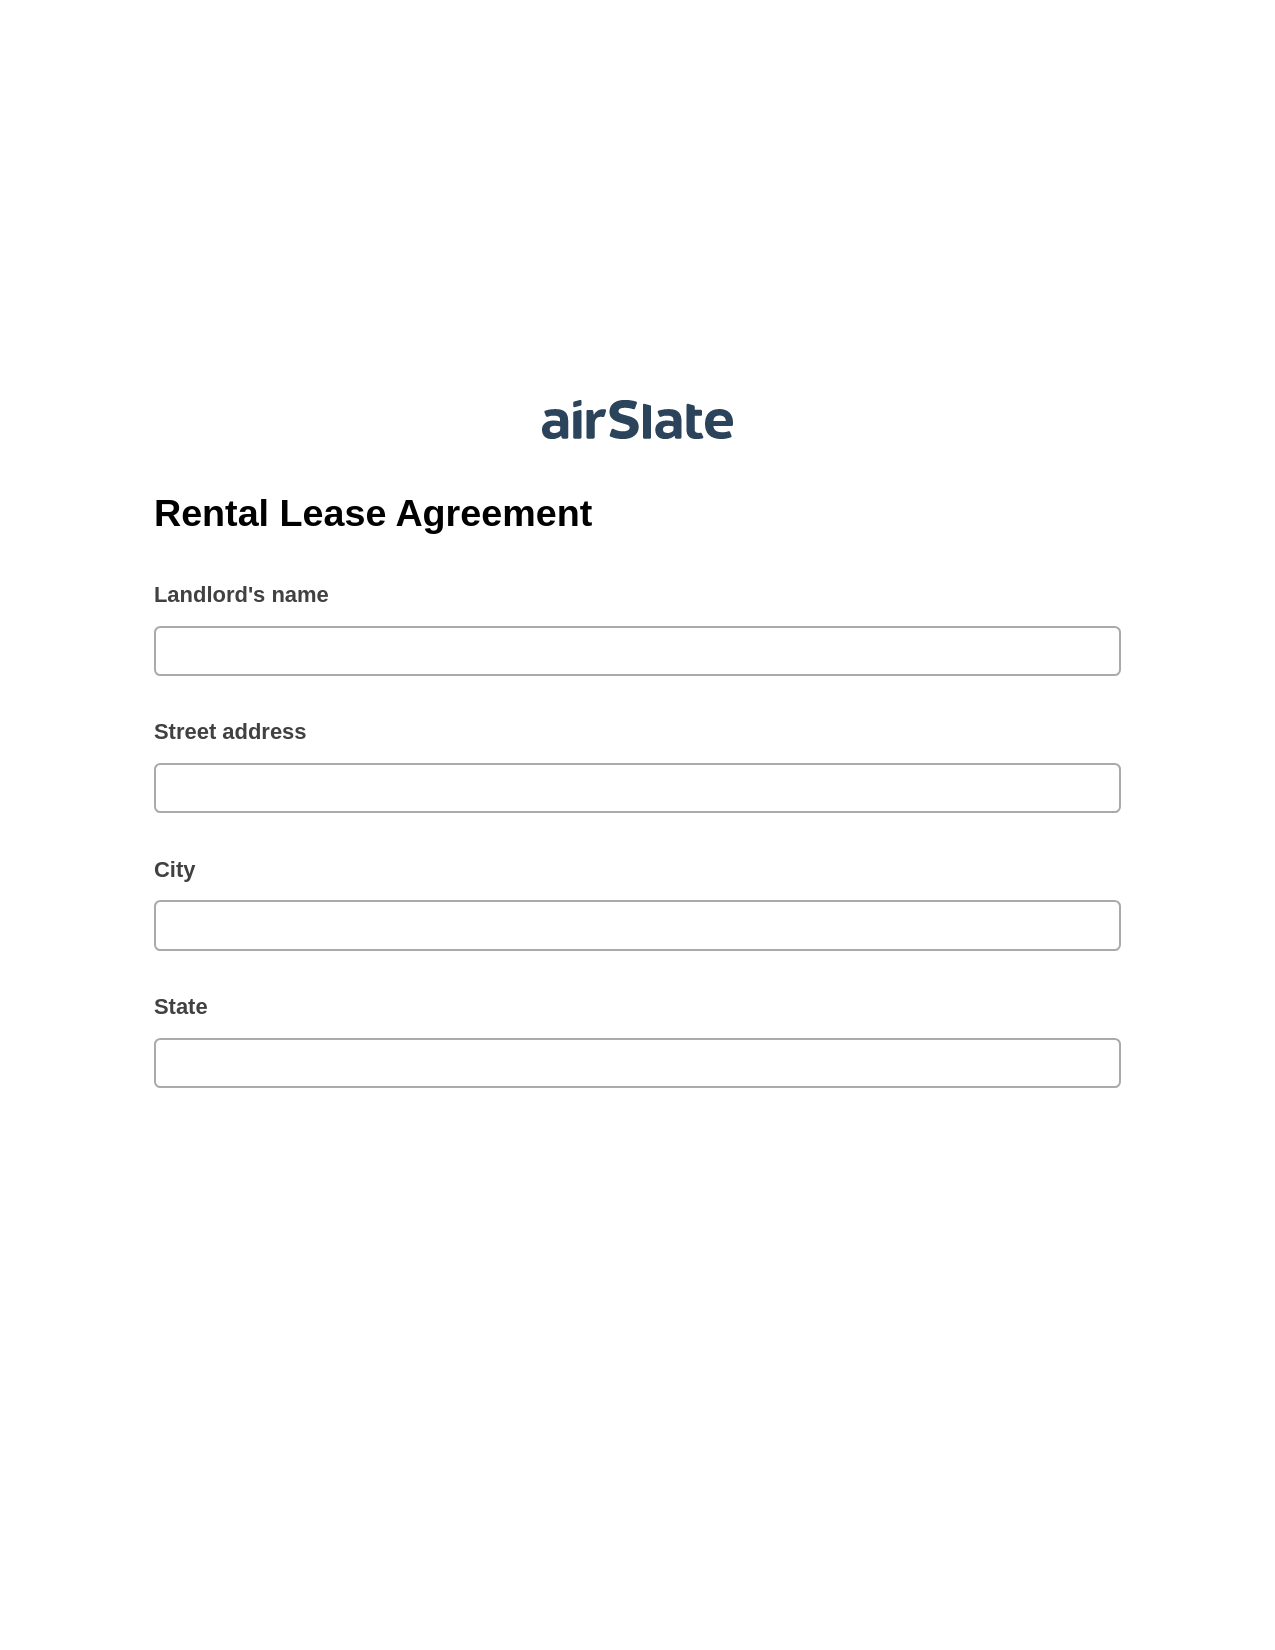 Rental Lease Agreement Pre-fill Slate from MS Dynamics 365 Records Bot, Google Calendar Bot, Export to MySQL Bot